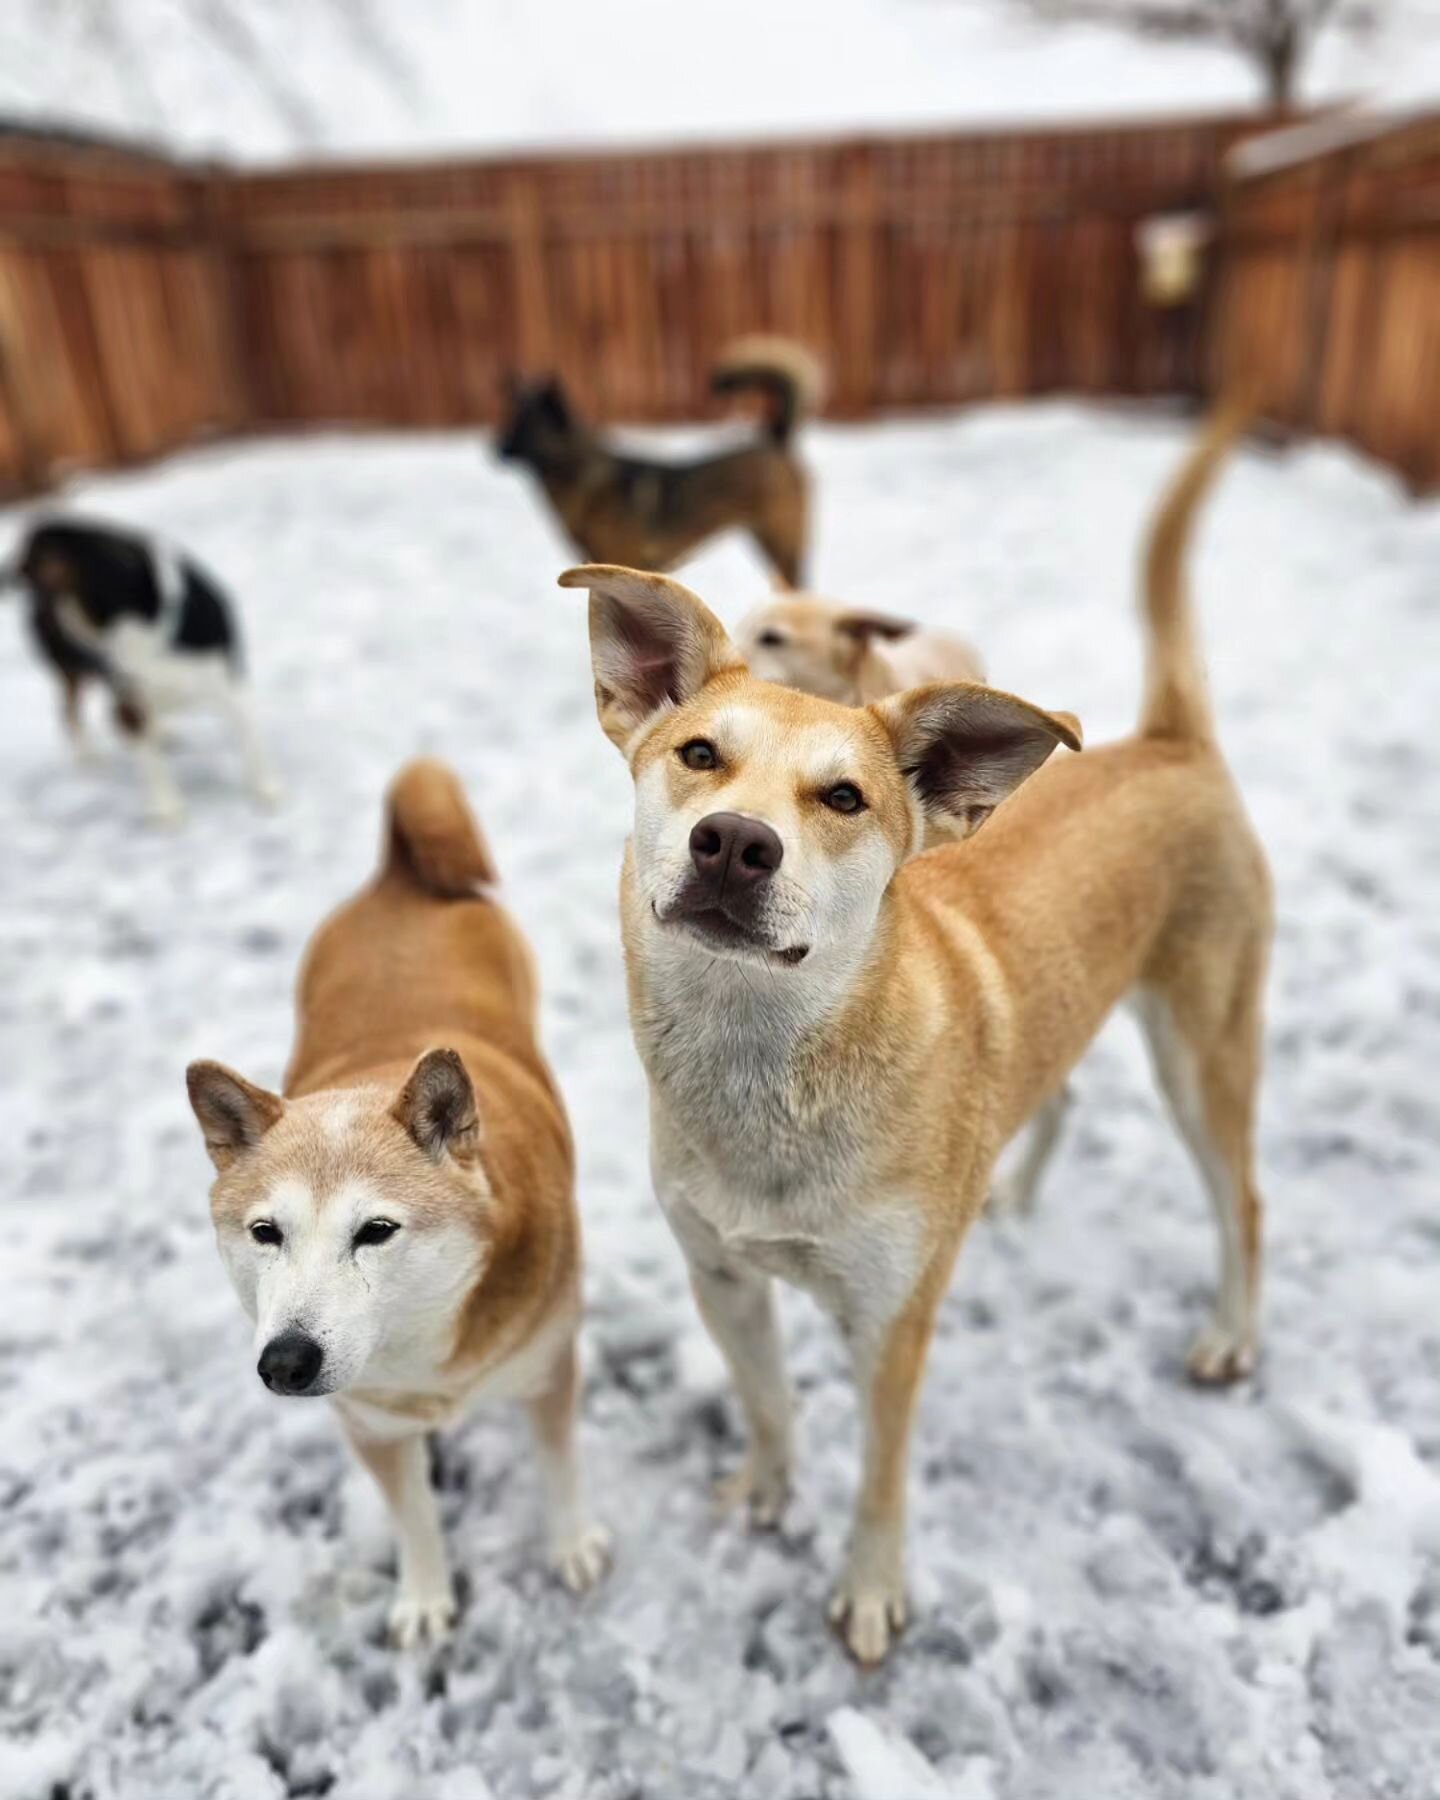 Snow much fun! 😁❄️

Penny and Ellie!

#rufflovedogs #snowday #dogsofinstagram #dogsofinsta #shibainu #shiba #happydogs #petstagram #dogstagram #petsofig #petsofinstagram #dogloversfeed #dog